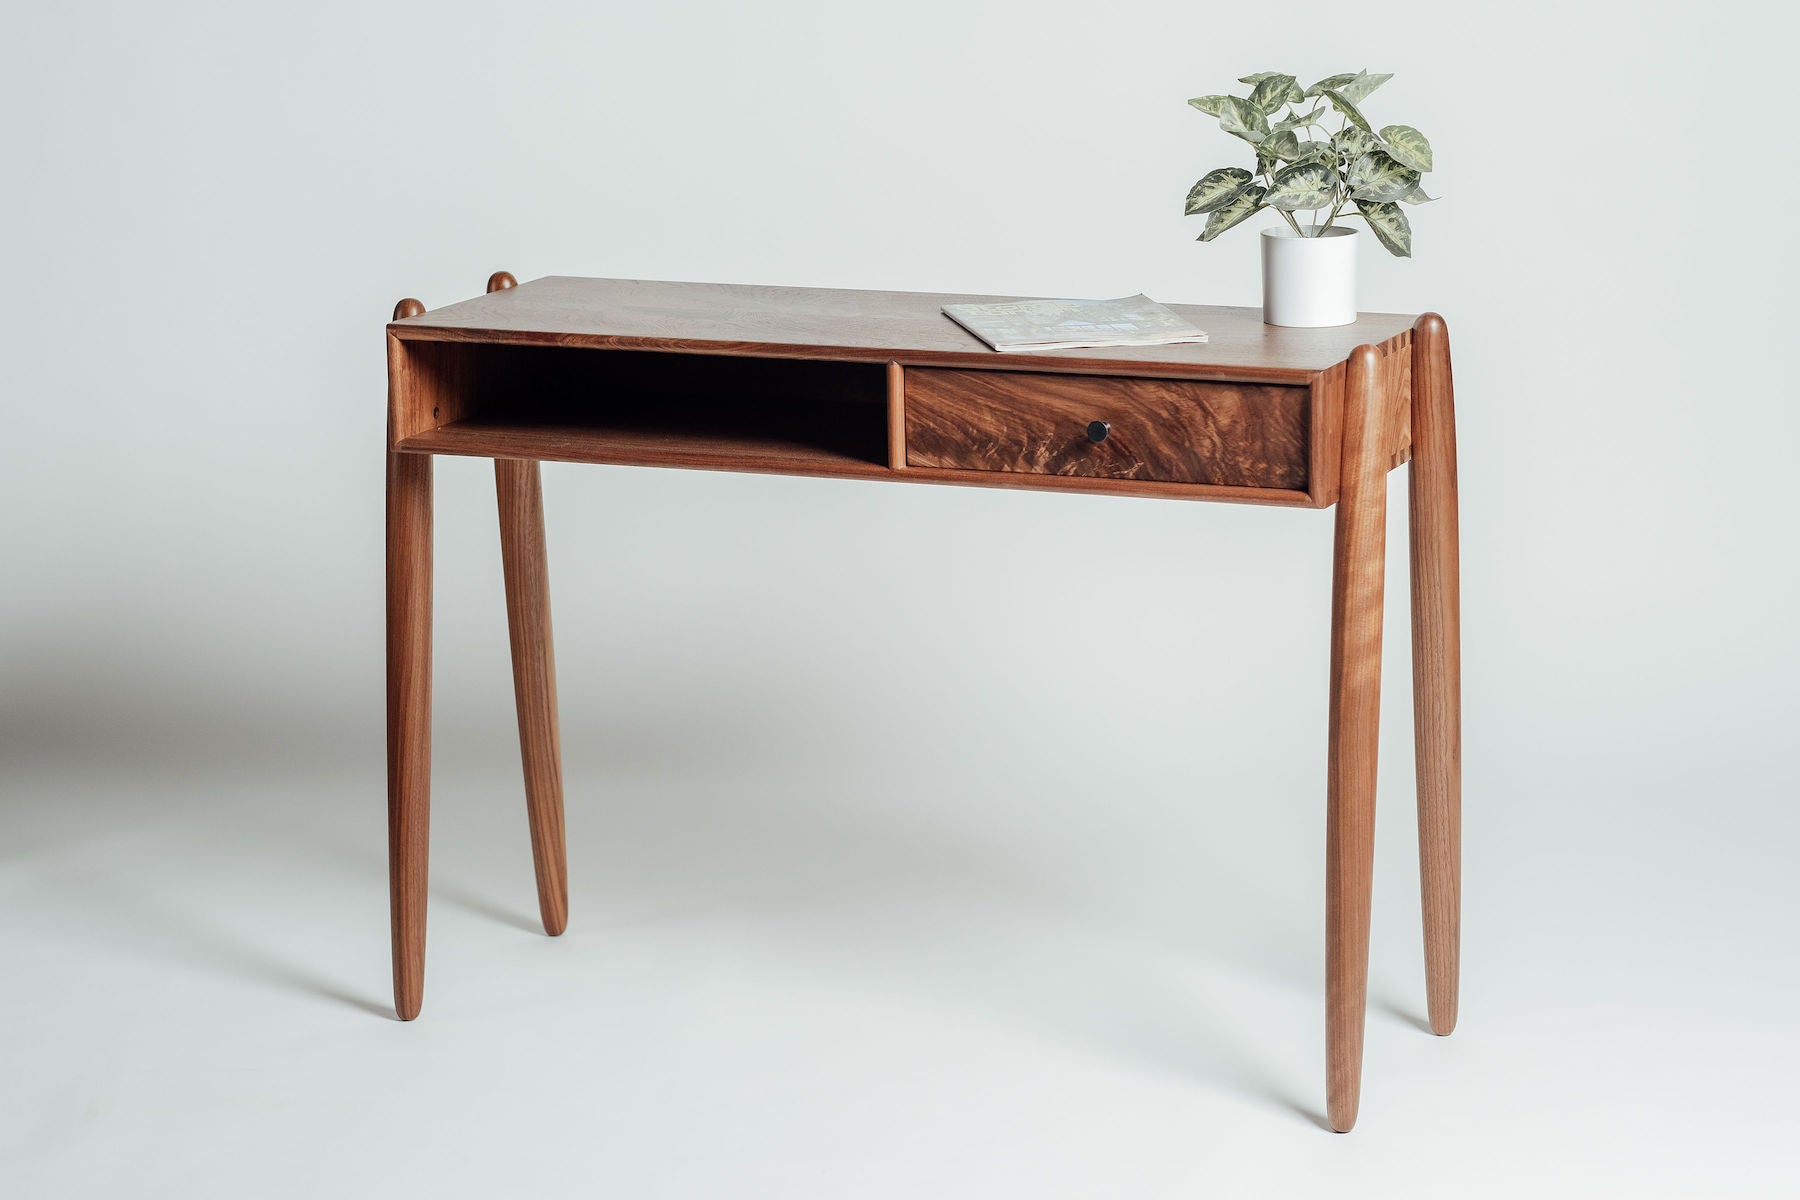 Solomon midcentury modern walnut wood Console Desk handcrafted by Hunt & Noyer in Michigan